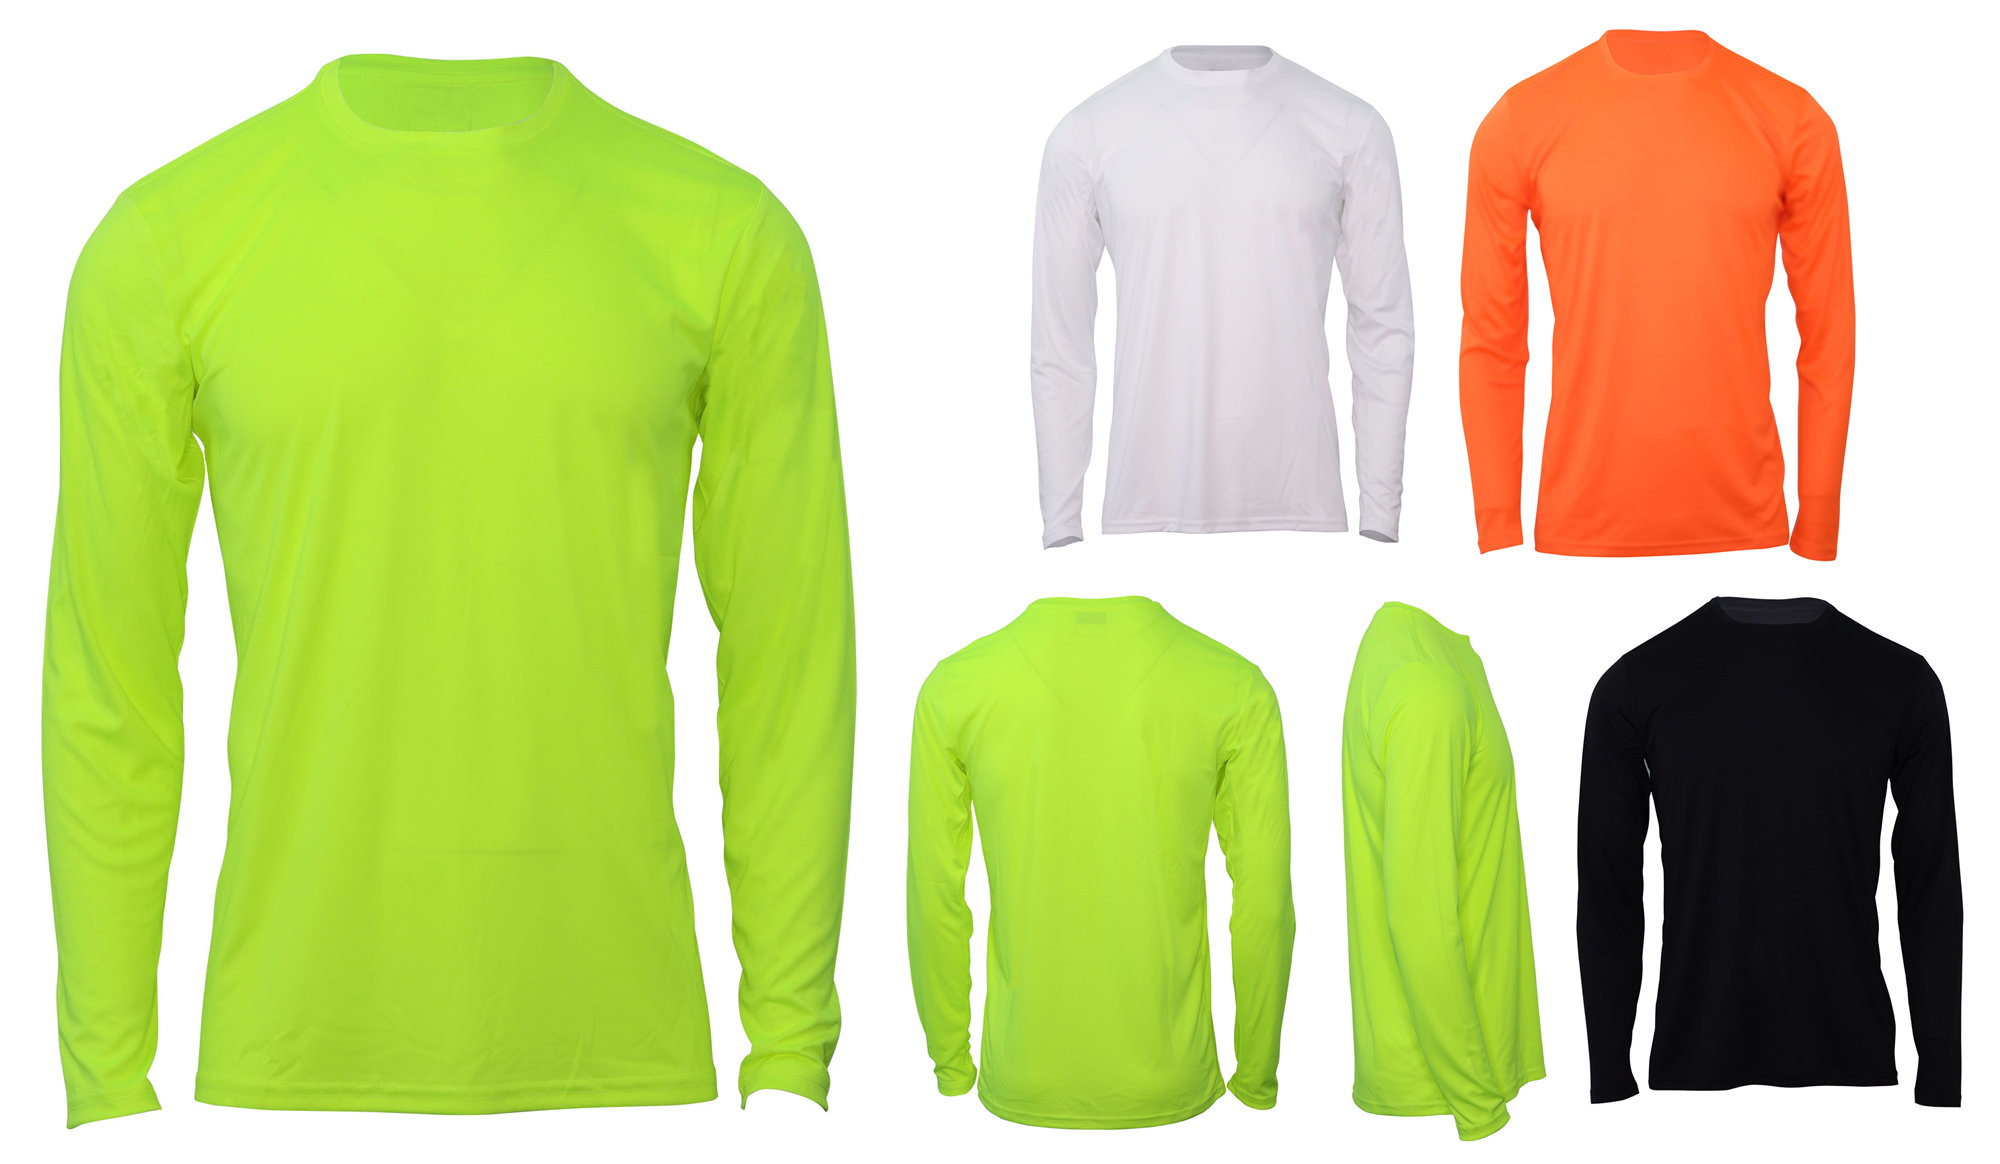 Men's Base Layer Crew Neck Long Sleeve SHIRTs - Plus Sizes - Choose Your Color(s)